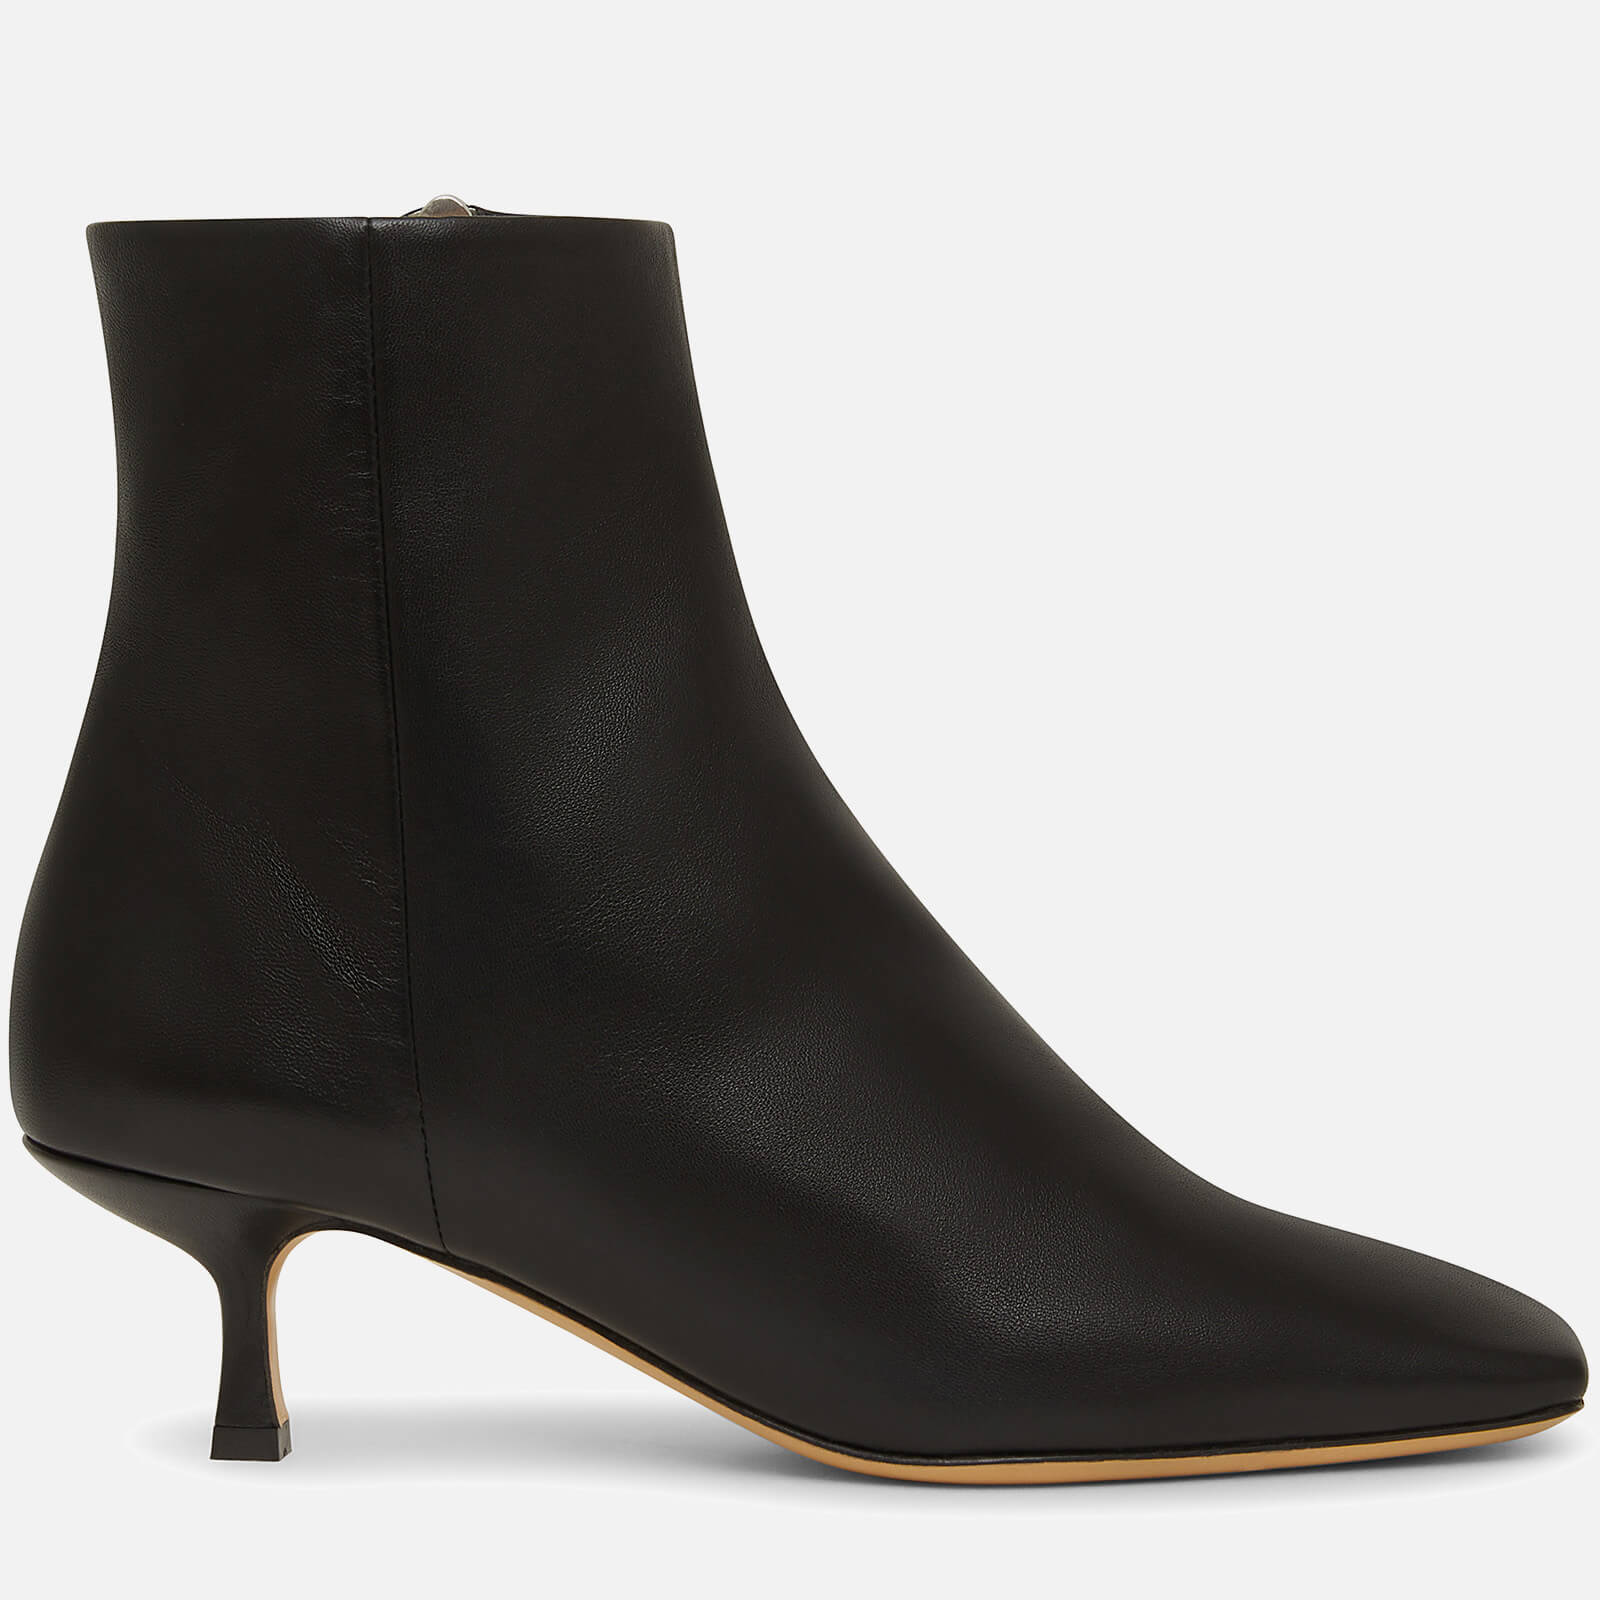 Mansur Gavriel Women's Square Toe Leather Heeled Ankle Boots - Black - UK 3